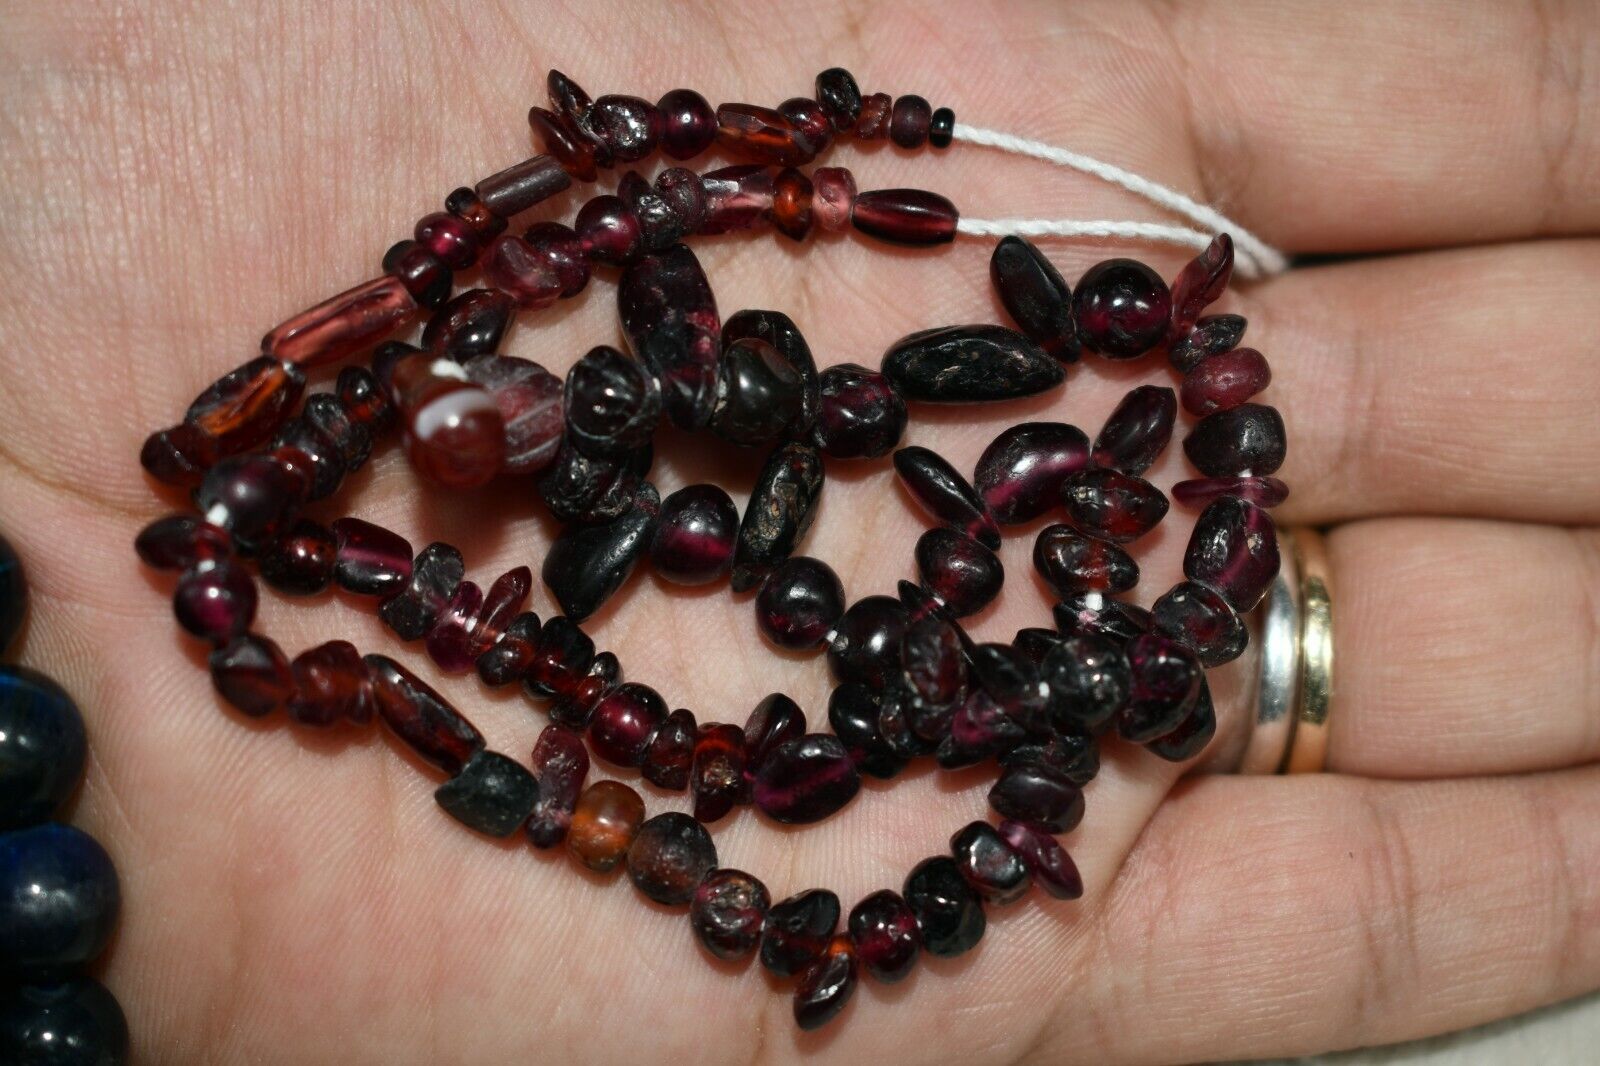 Authentic Ancient Roman Period Garnet Stone Beads Necklace C. 200 BC - 500 AD